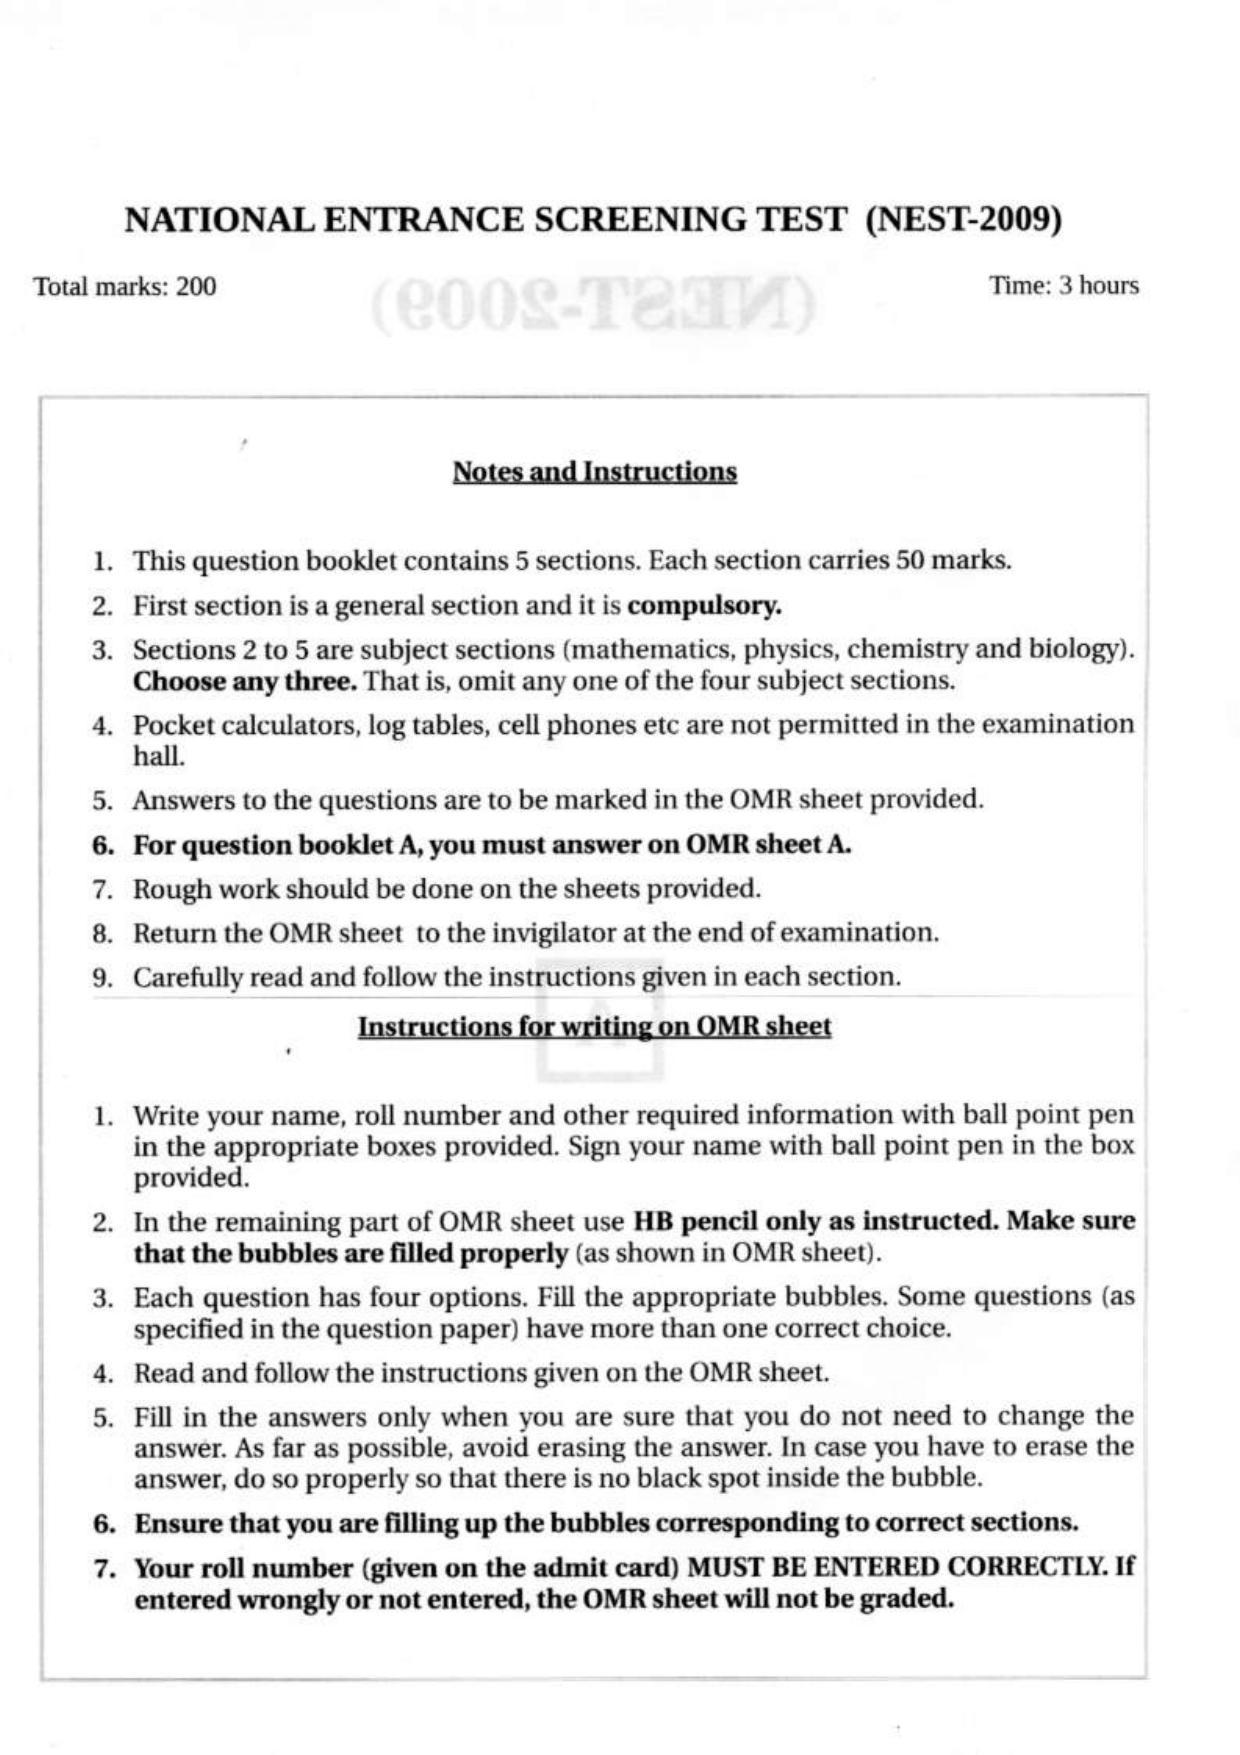 NEST 2009 Question Paper - Page 2